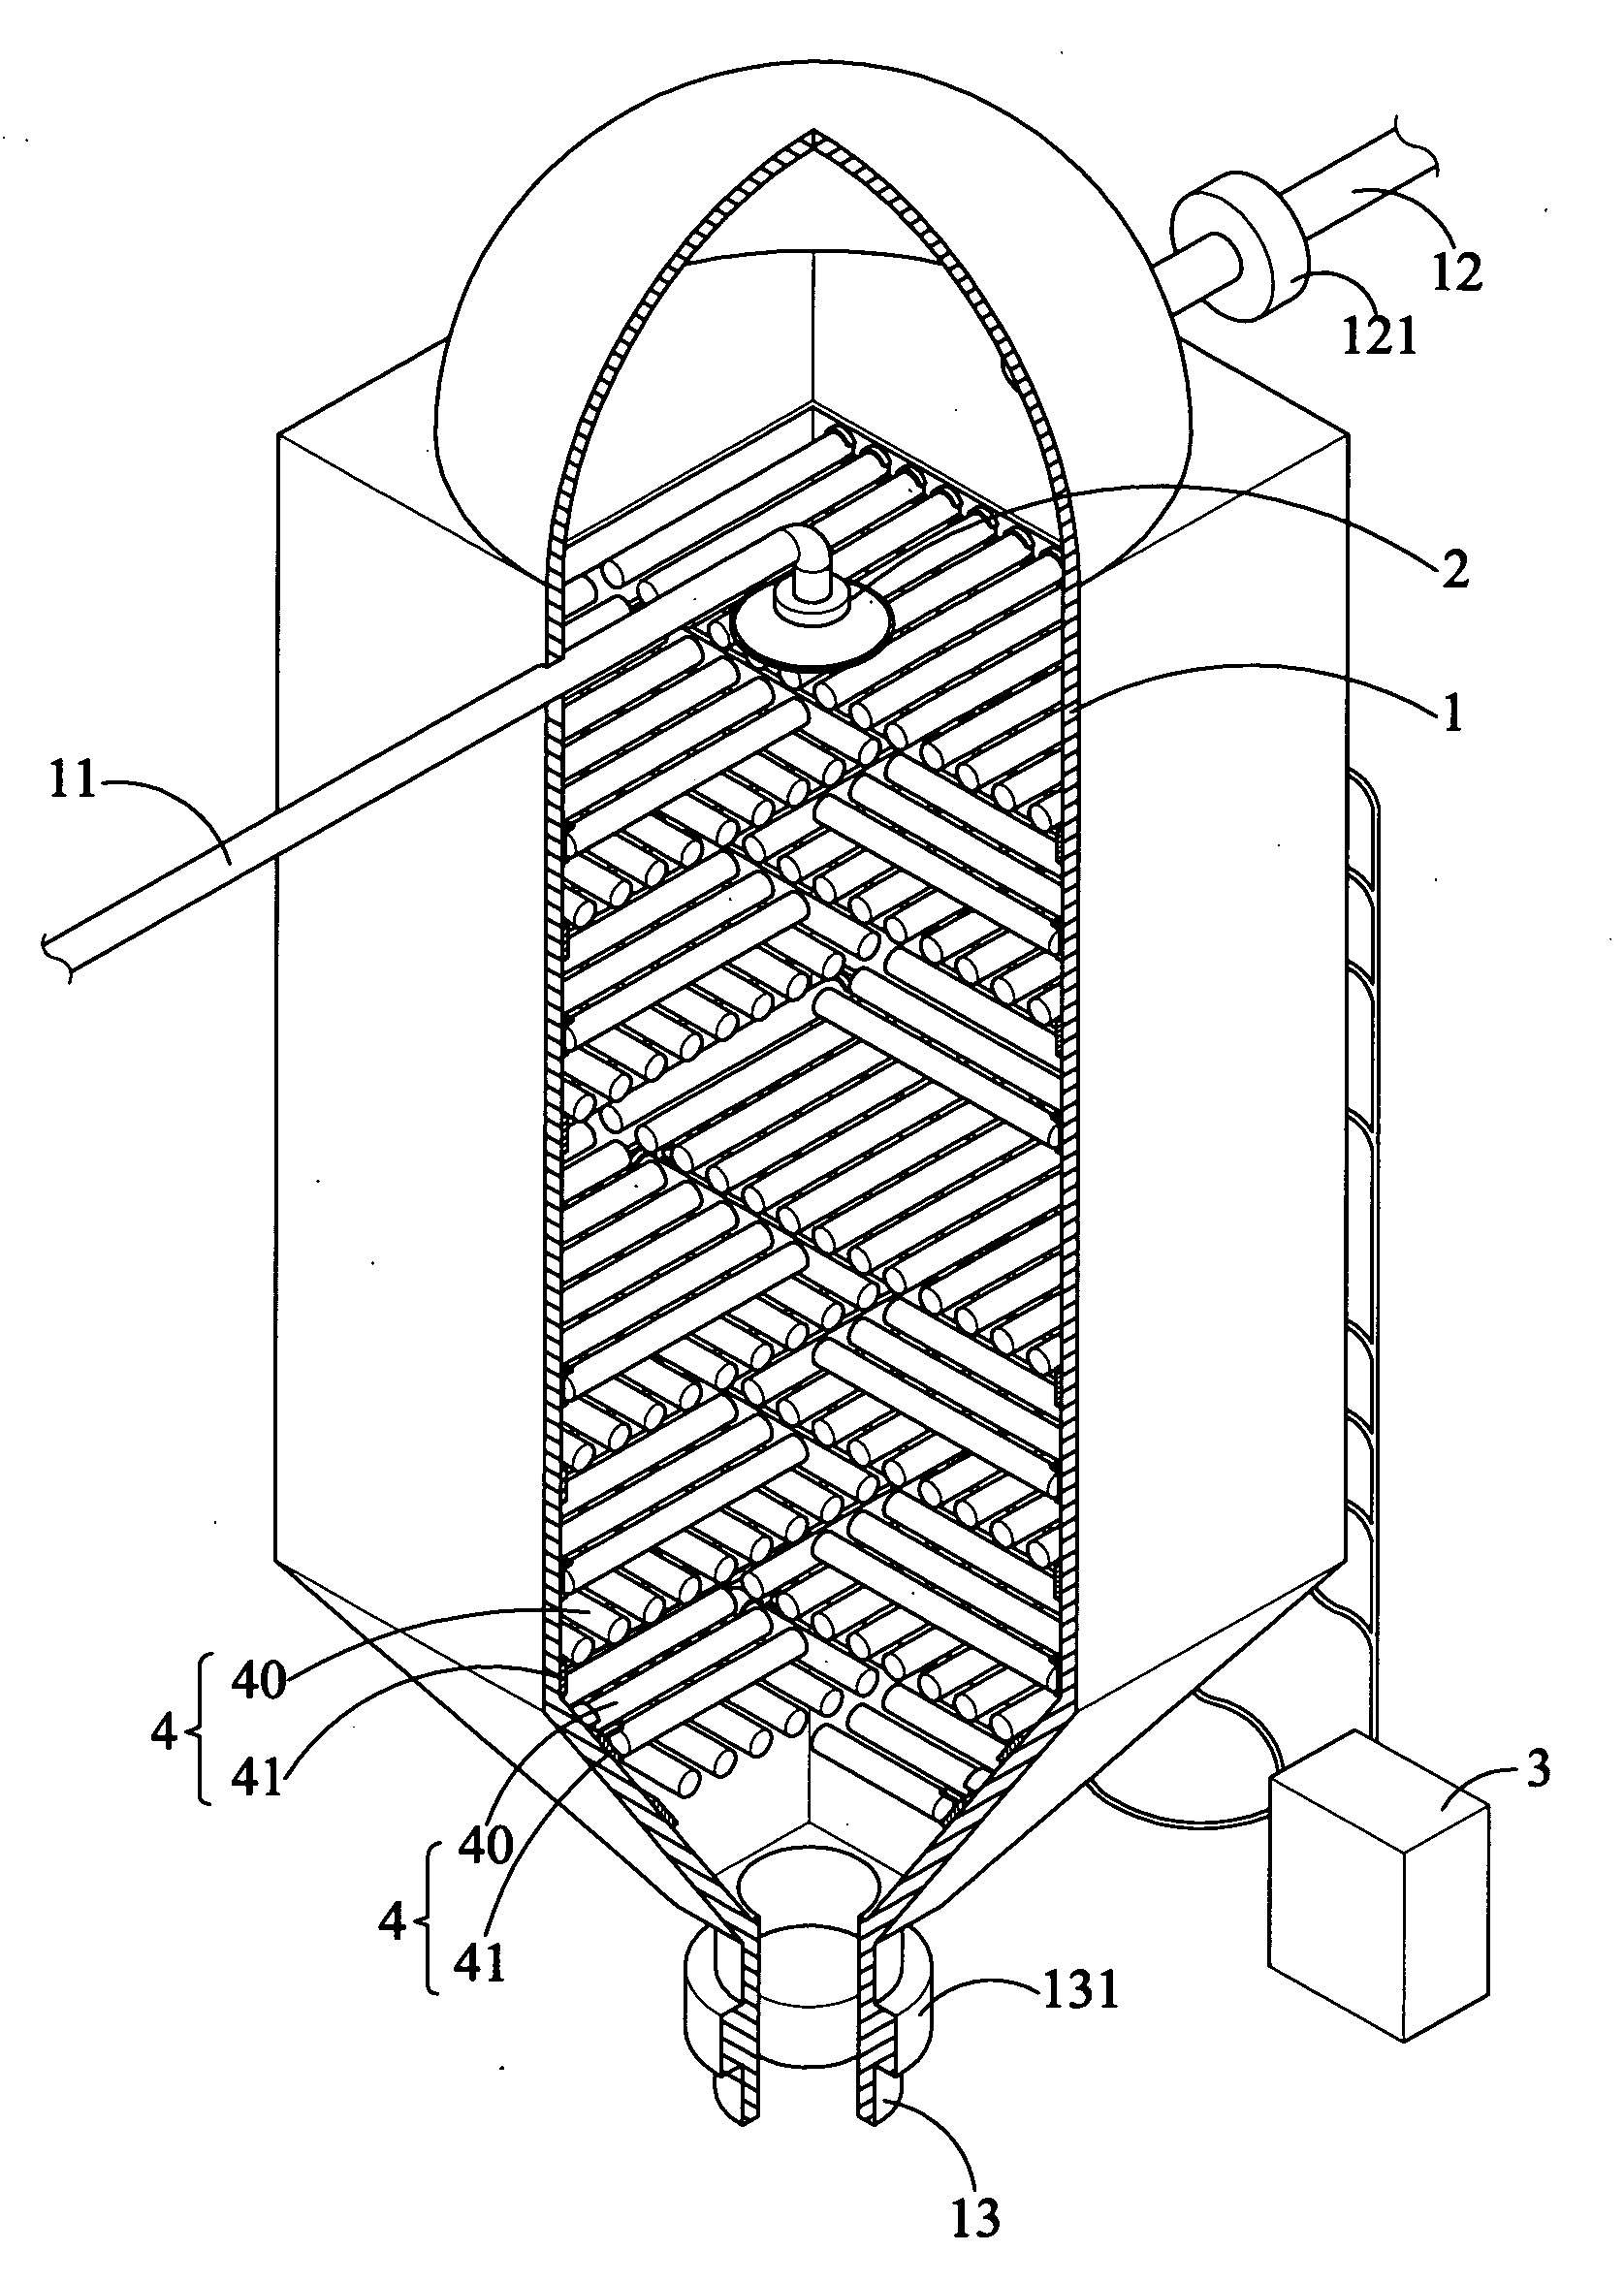 Porous honeycomb water treatment device